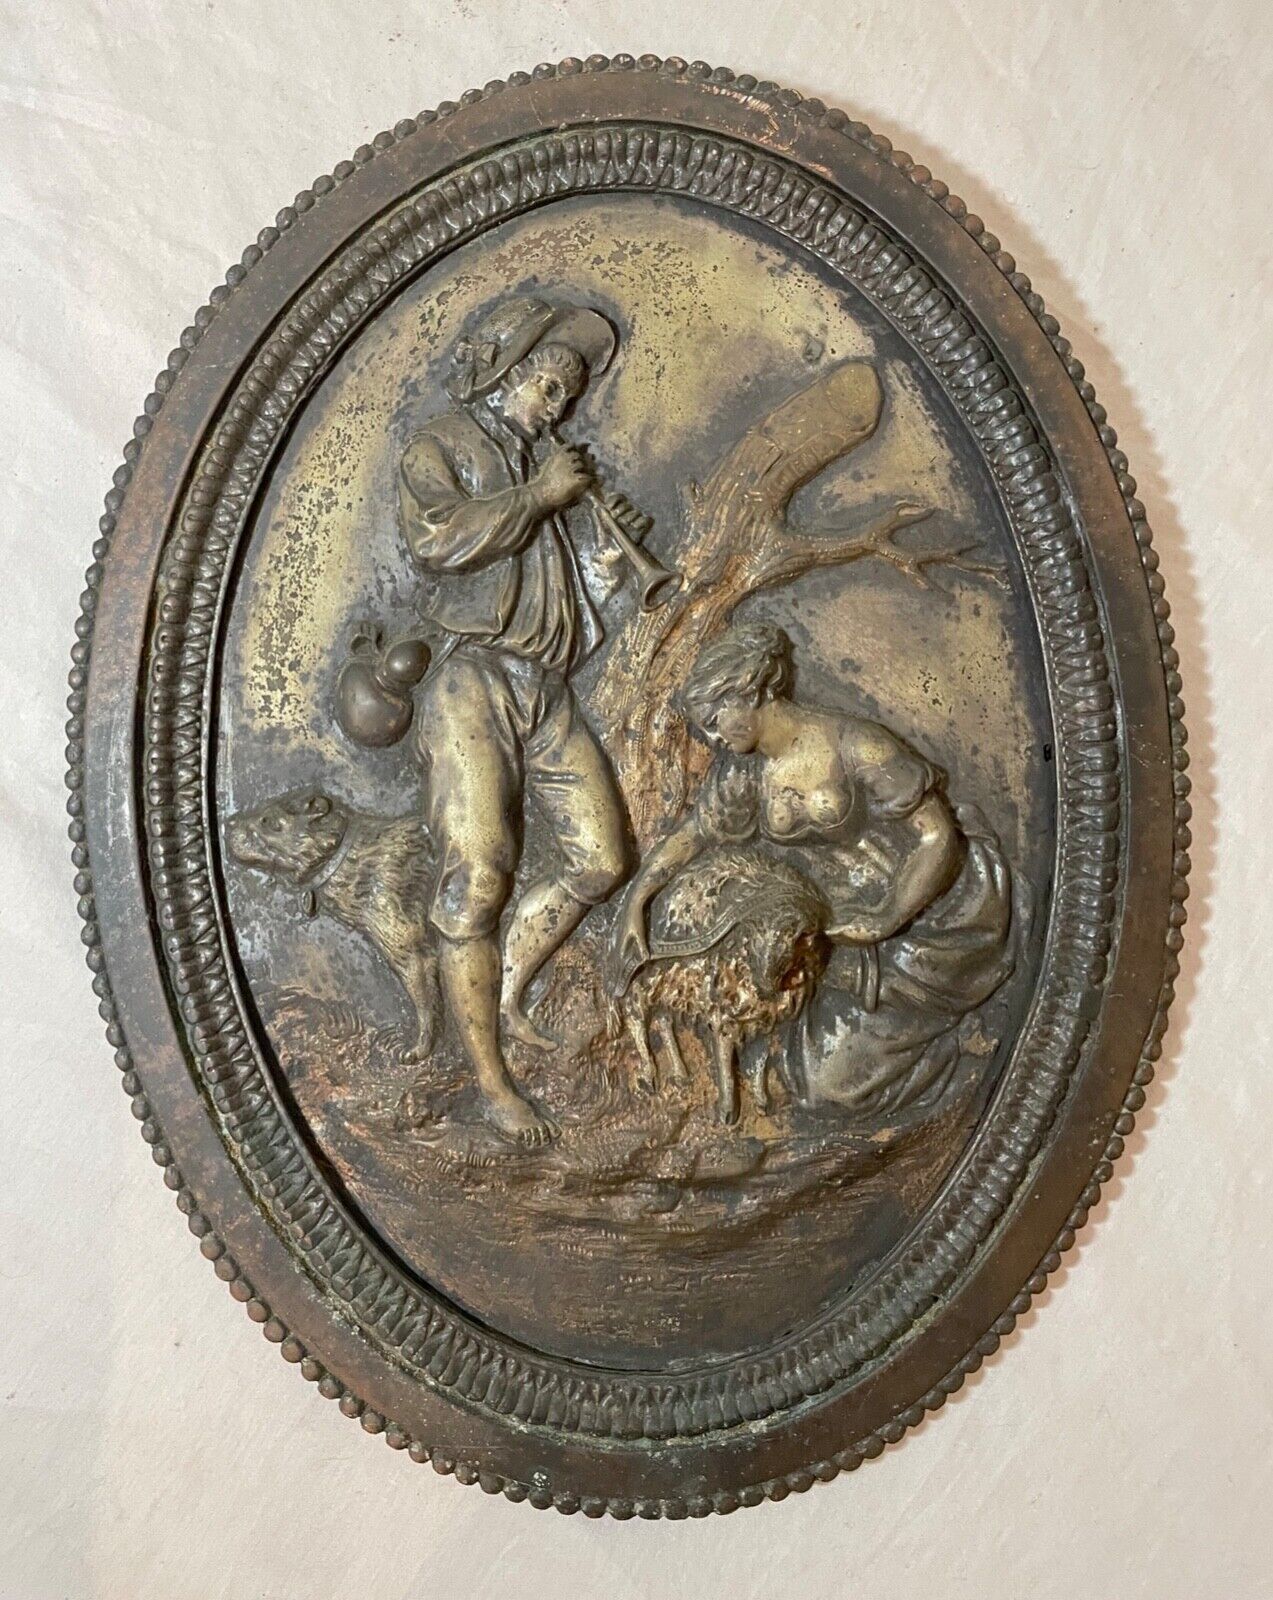 antique 1800's solid bronze relief wall plaque art animal figural scene statue